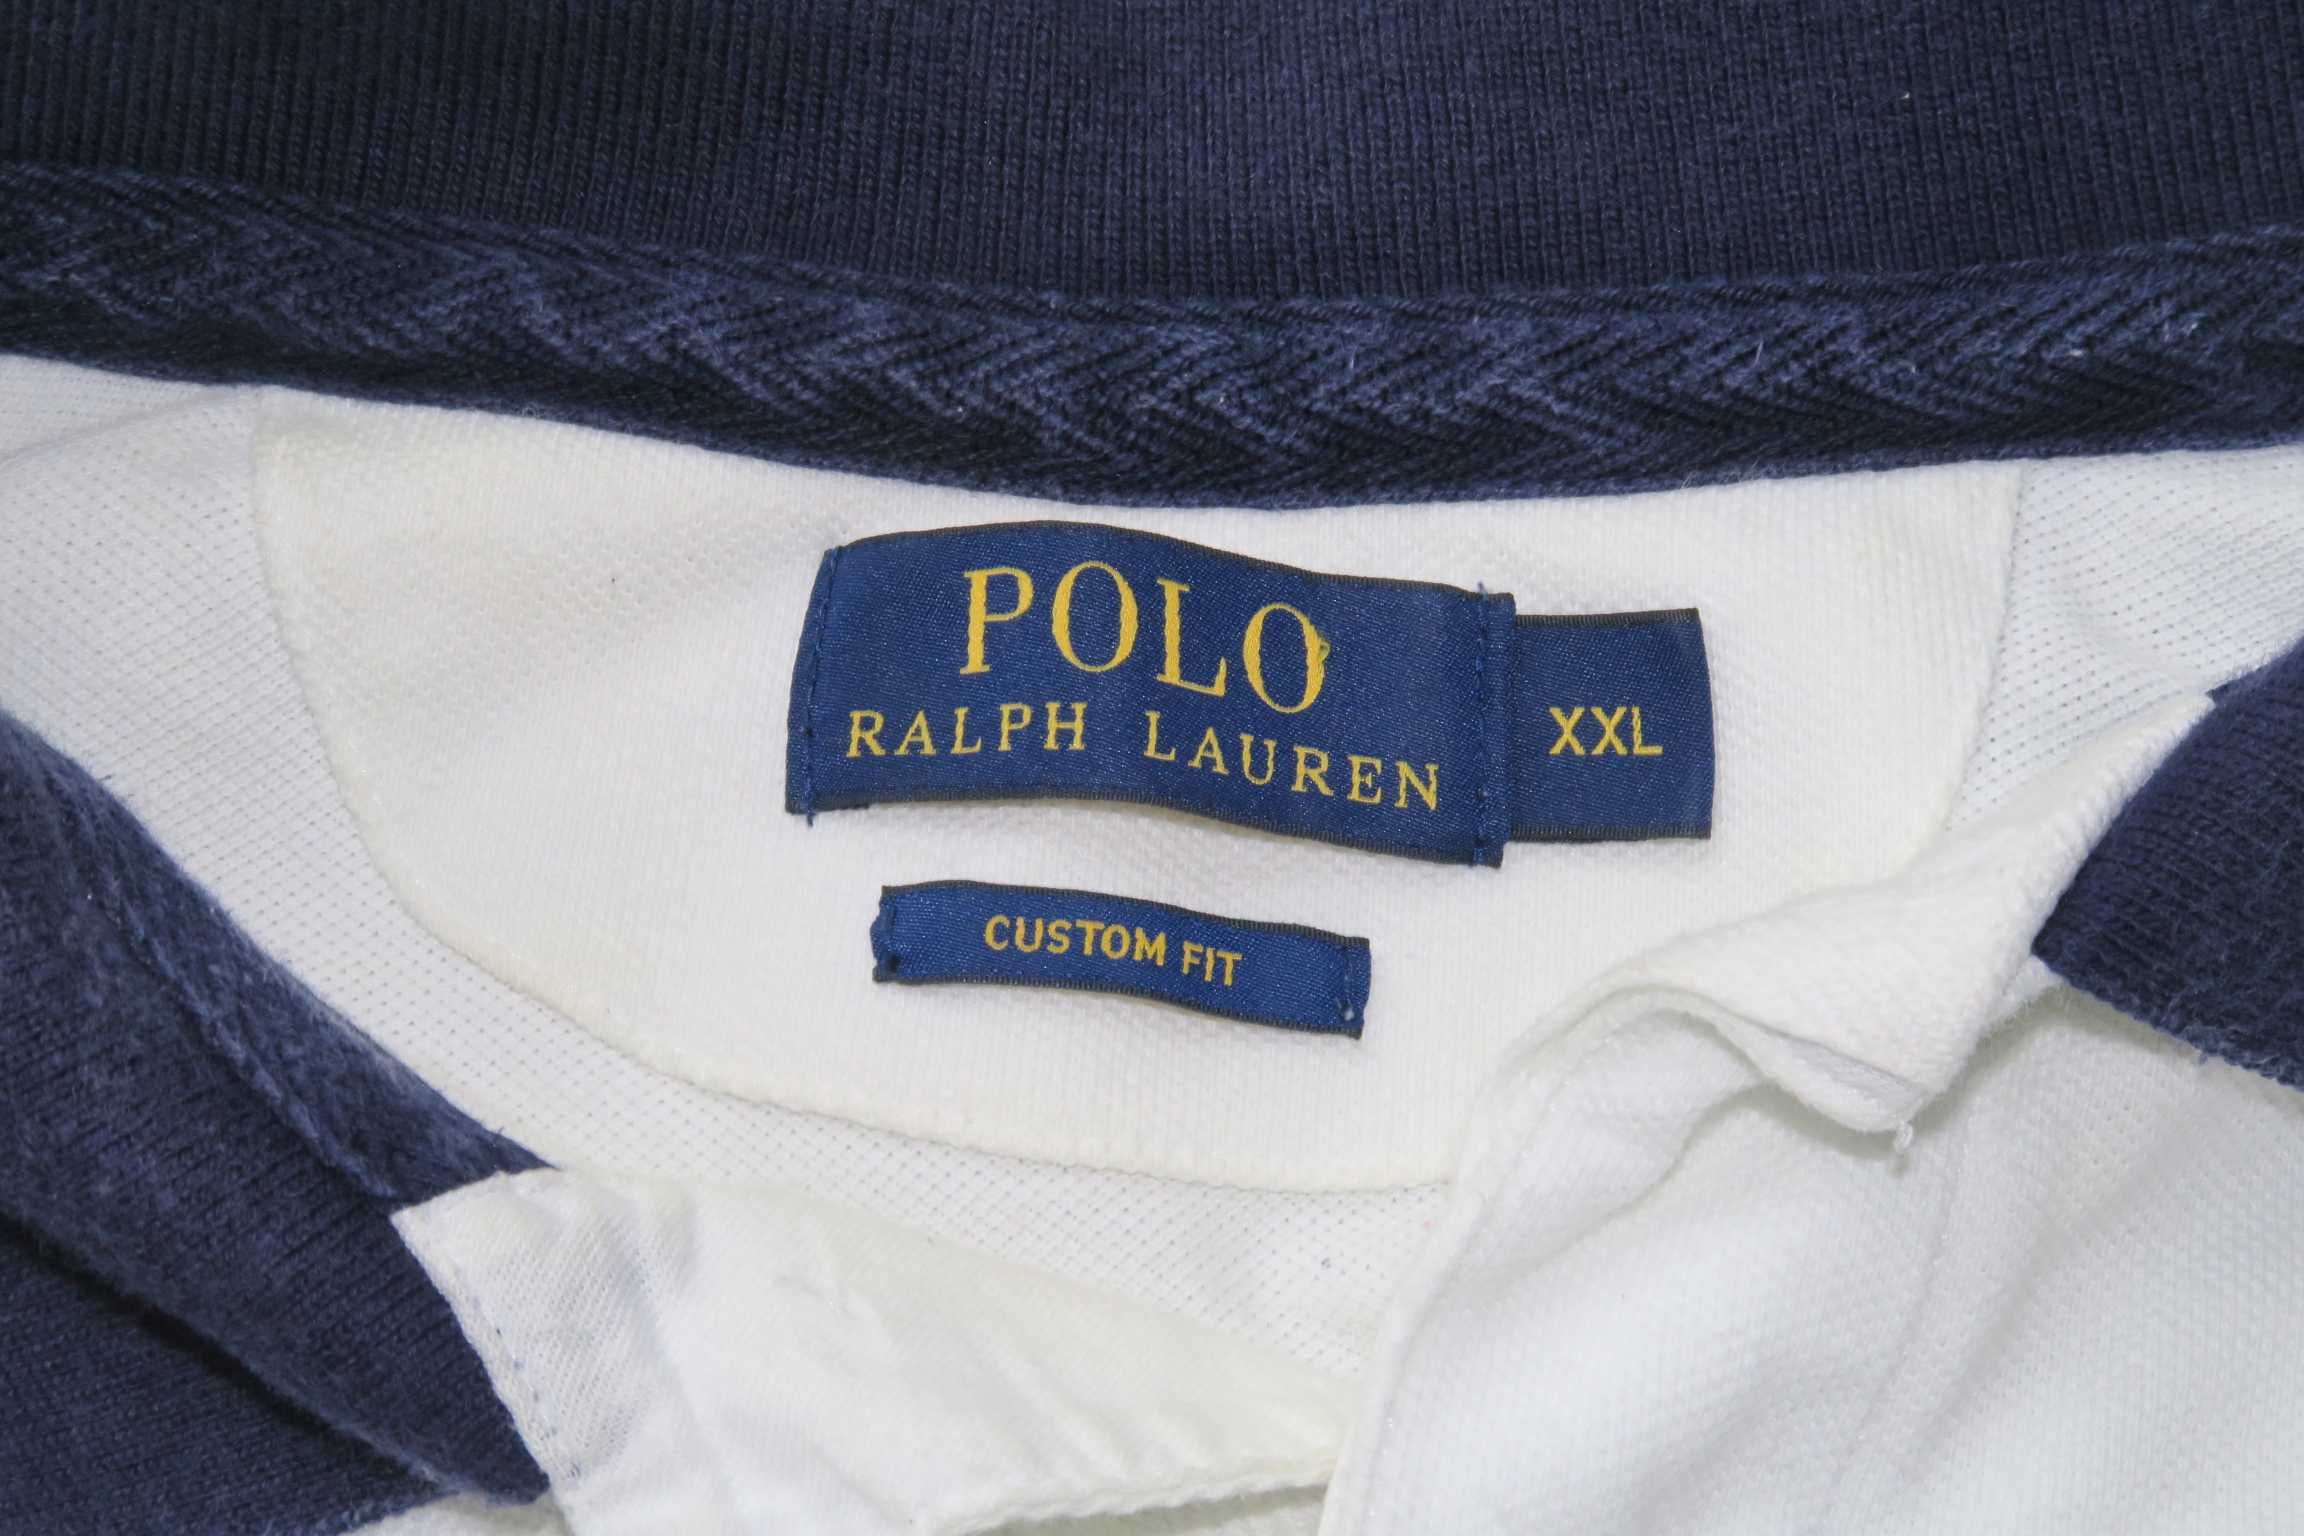 Ralph Lauren koszulka polo nowe kolekcje XXL